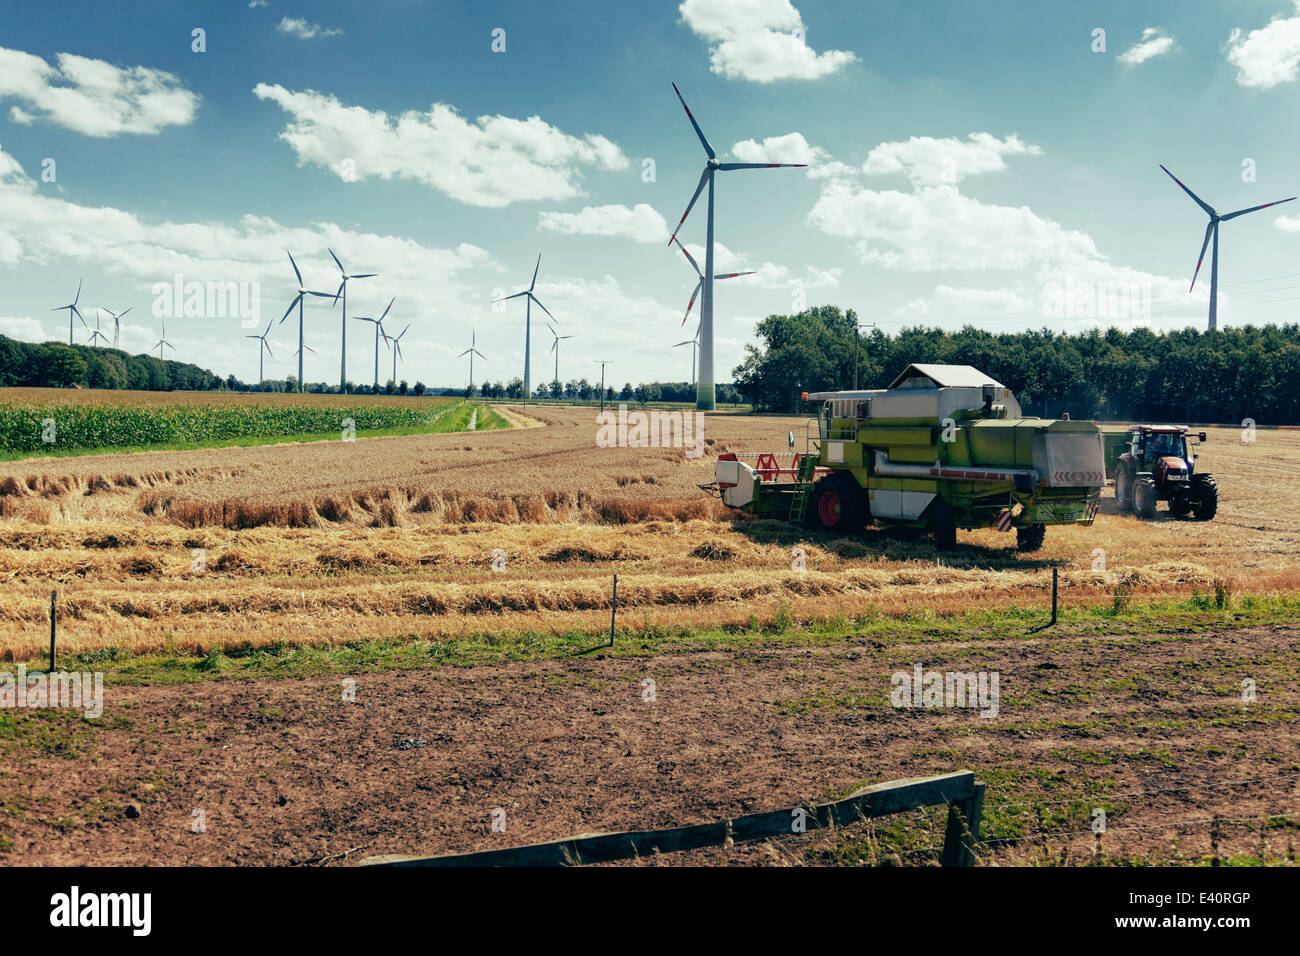 Germany, North Rhine-Westphalia, Sassenberg, Harvester in field, wind wheels in background Stock Photo